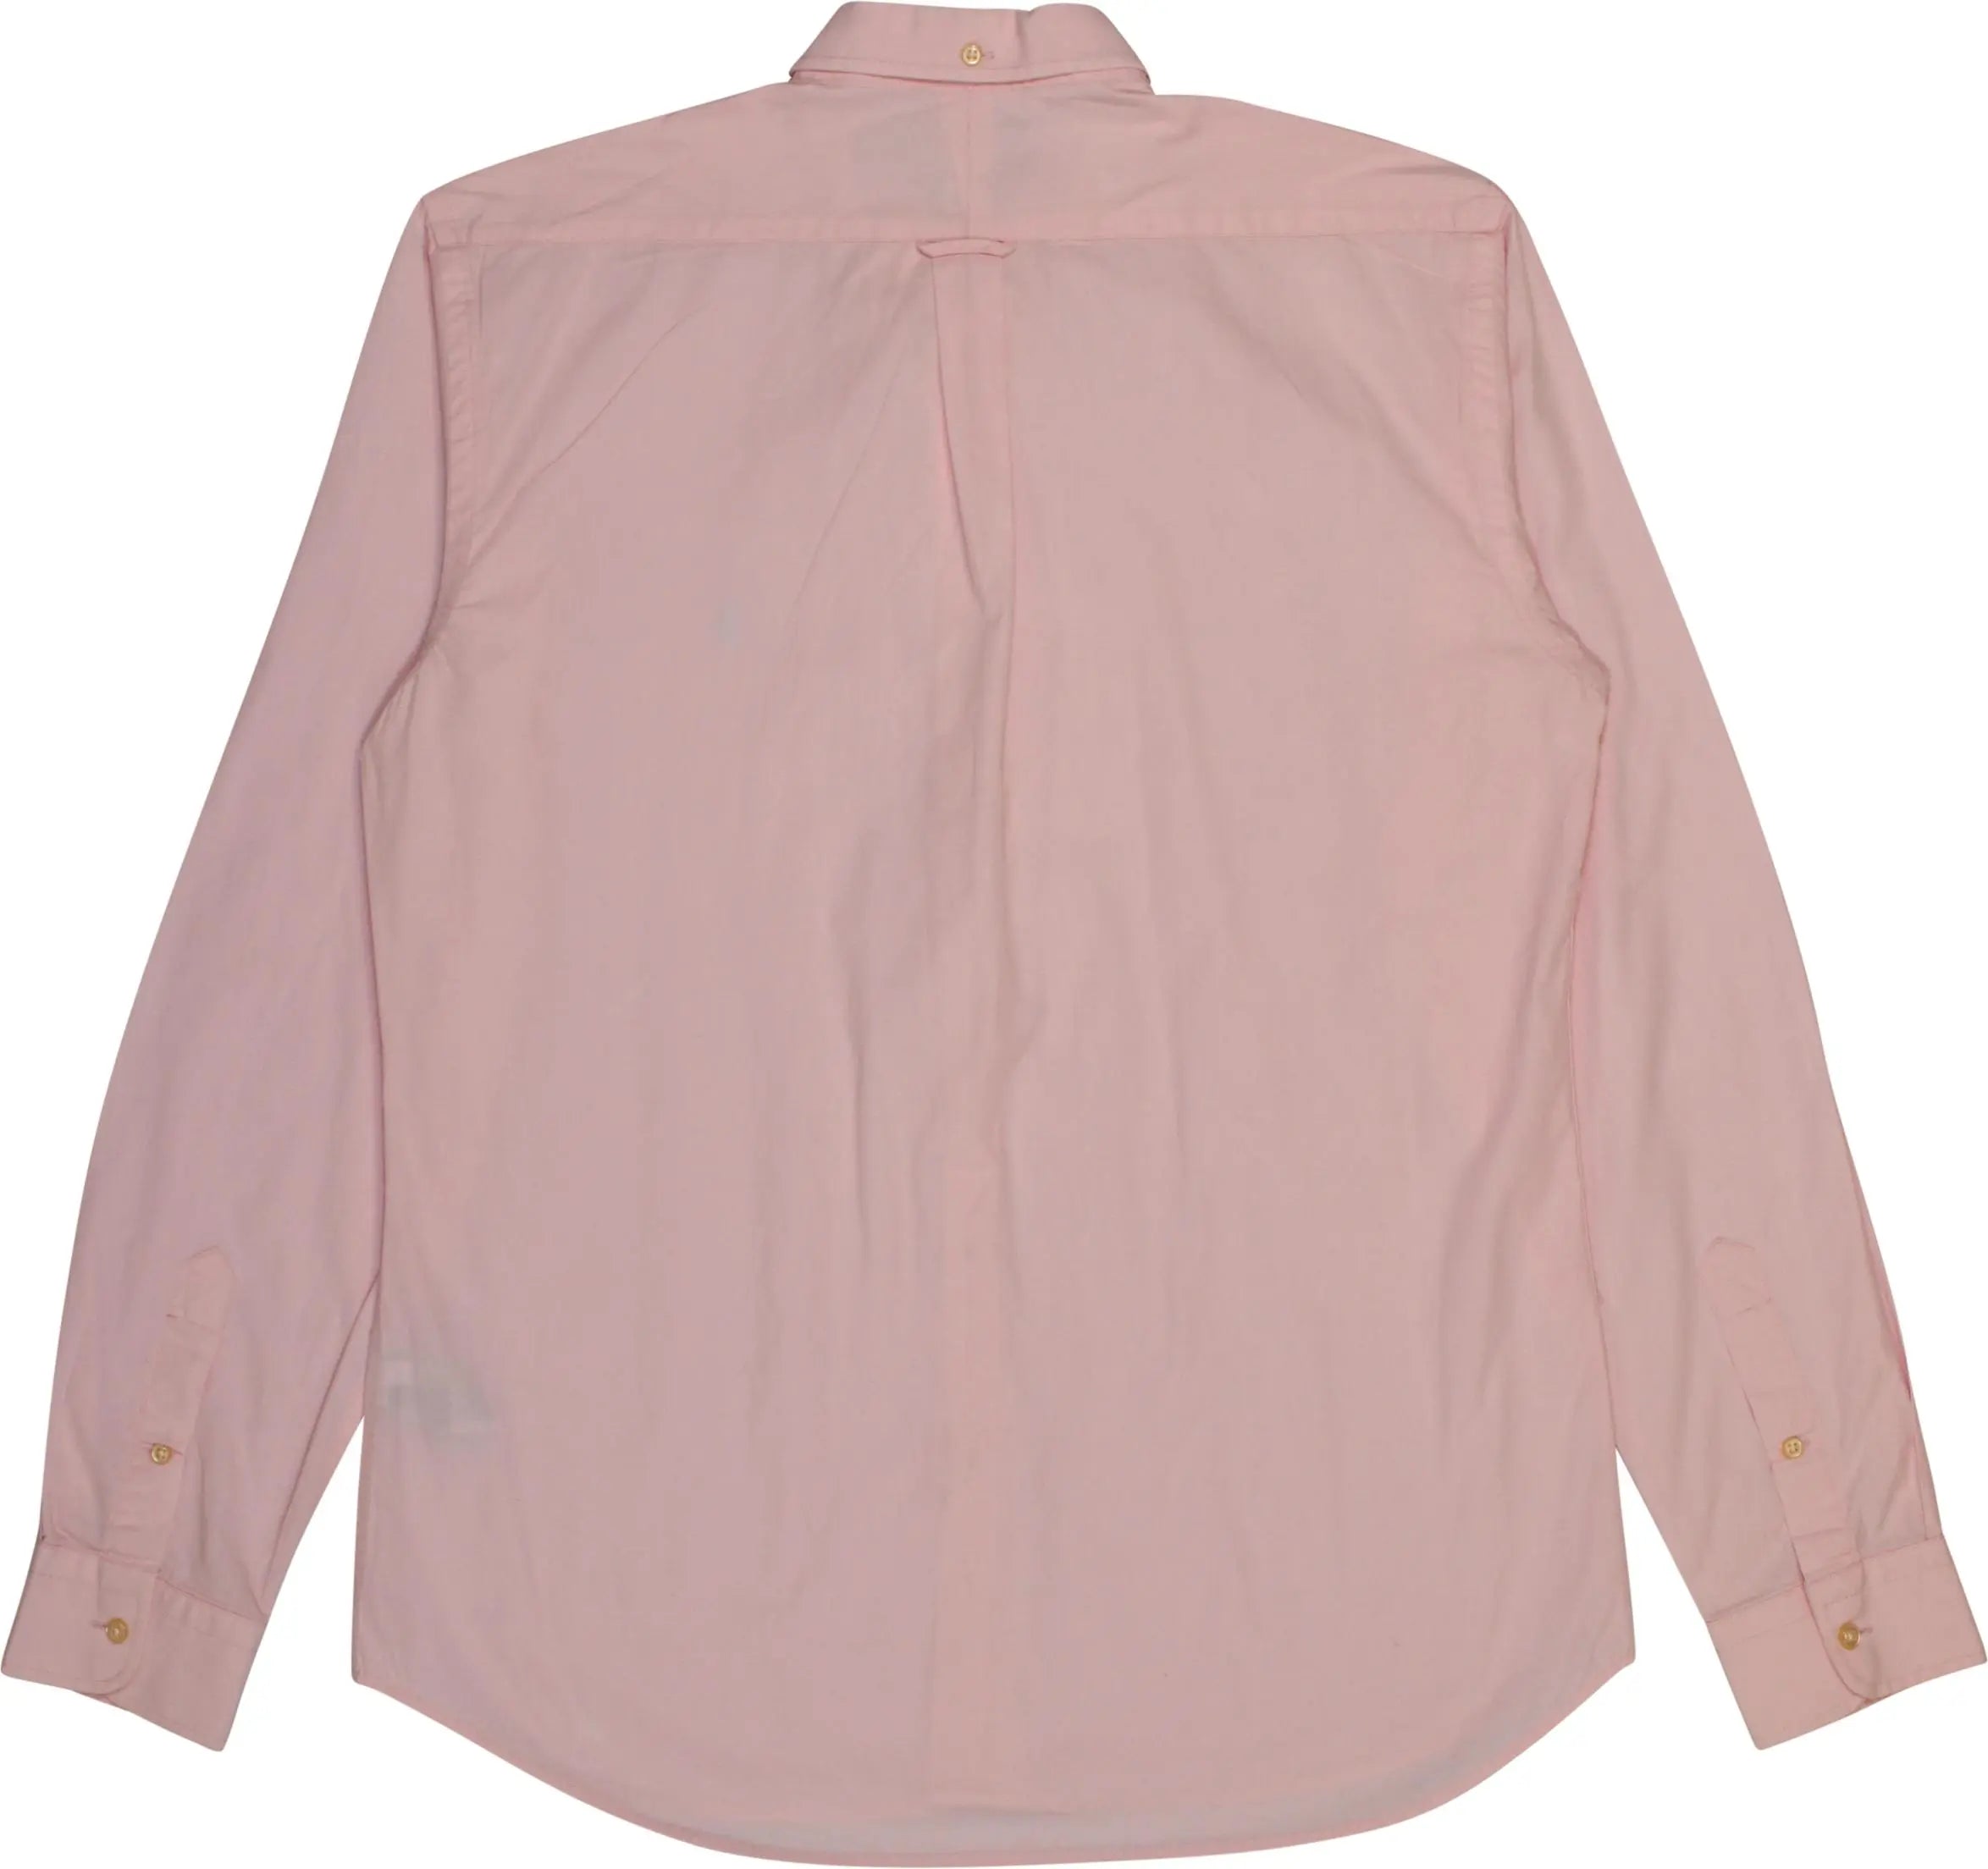 Ralph Lauren - Pink Long Sleeve Shirt by Ralph Lauren- ThriftTale.com - Vintage and second handclothing